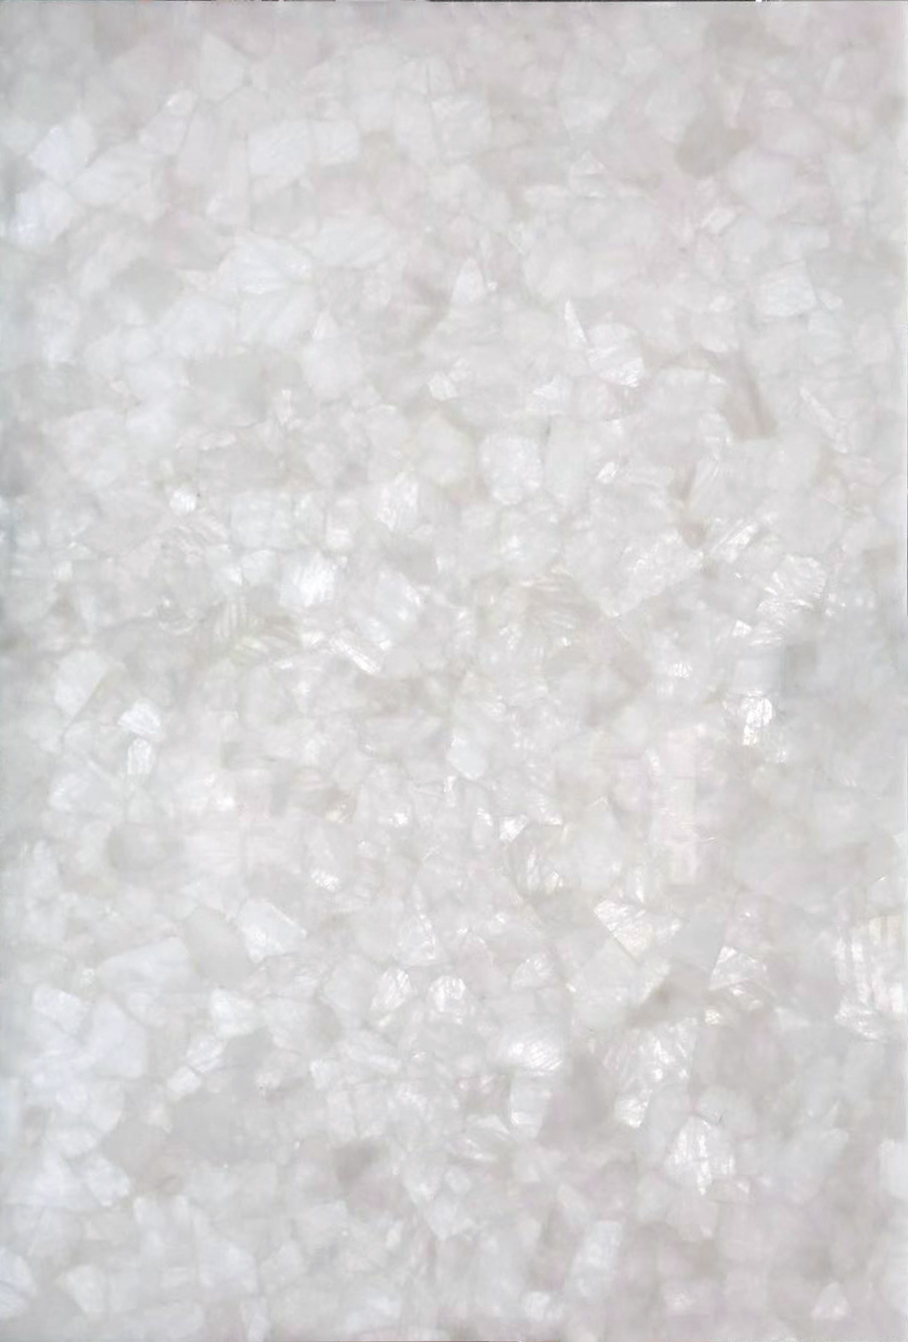 GEM-301 White Crystal